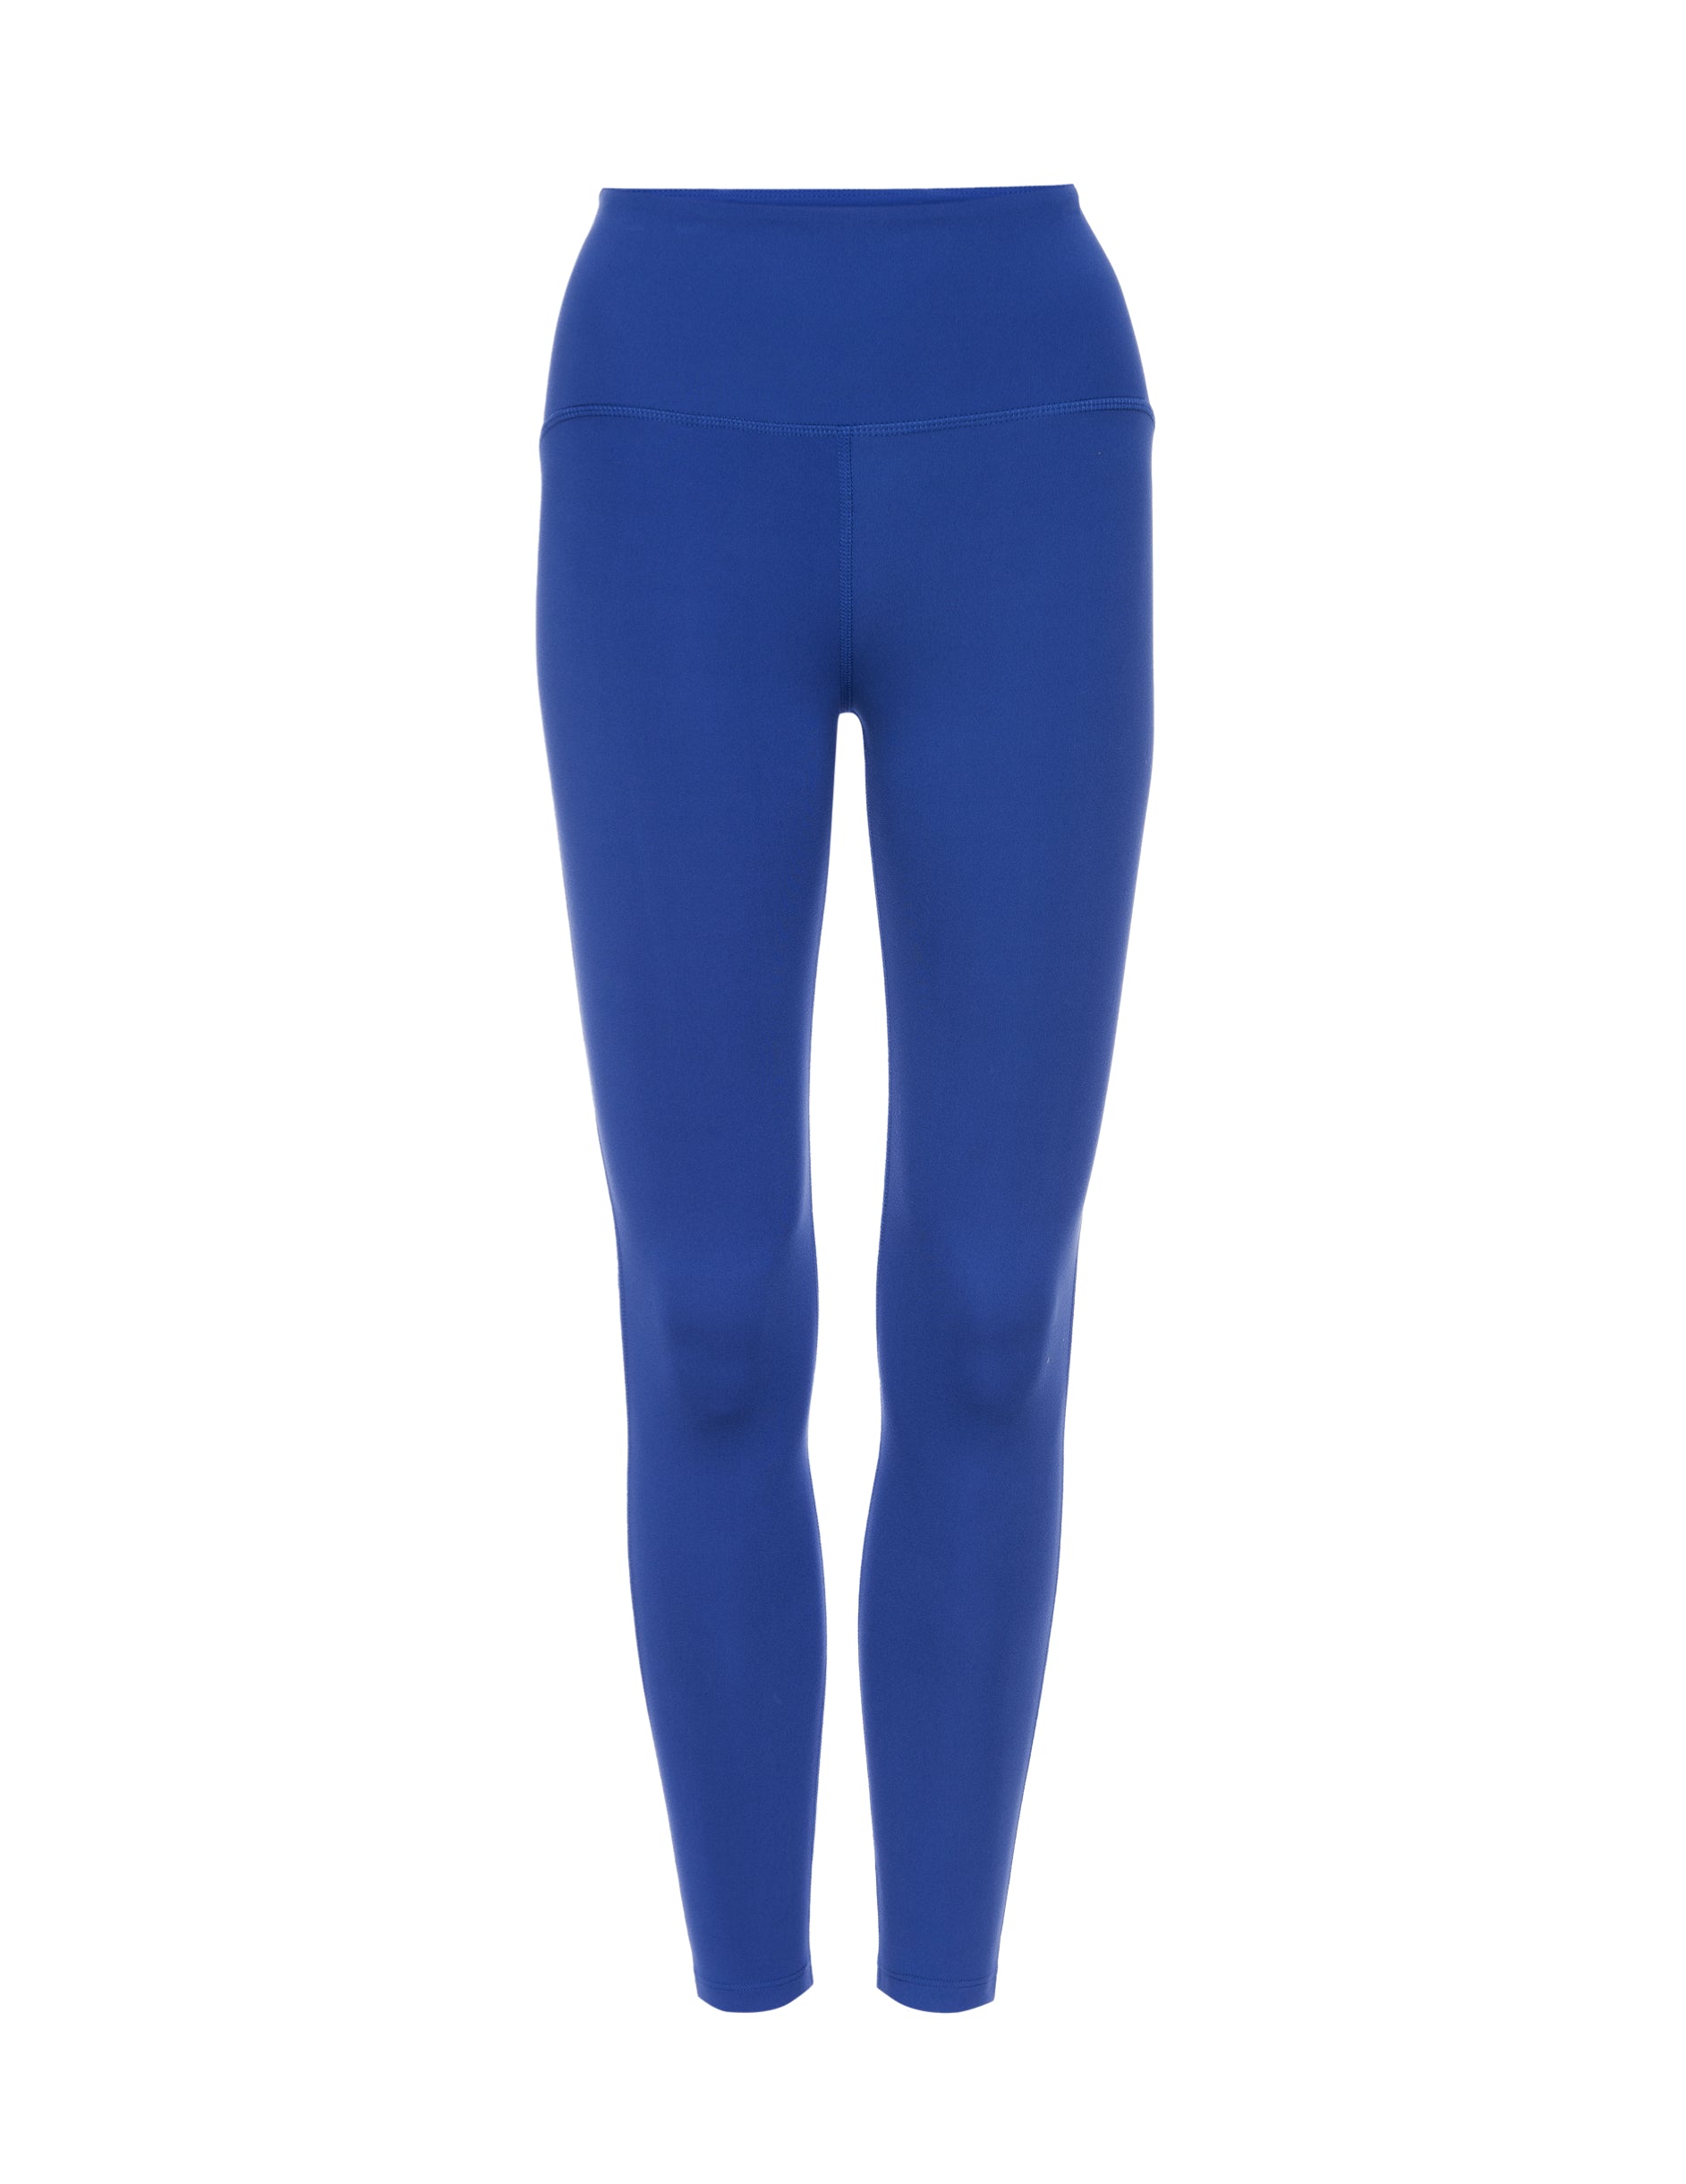 blue 4" high-waisted midi PowerBeyond leggings. 